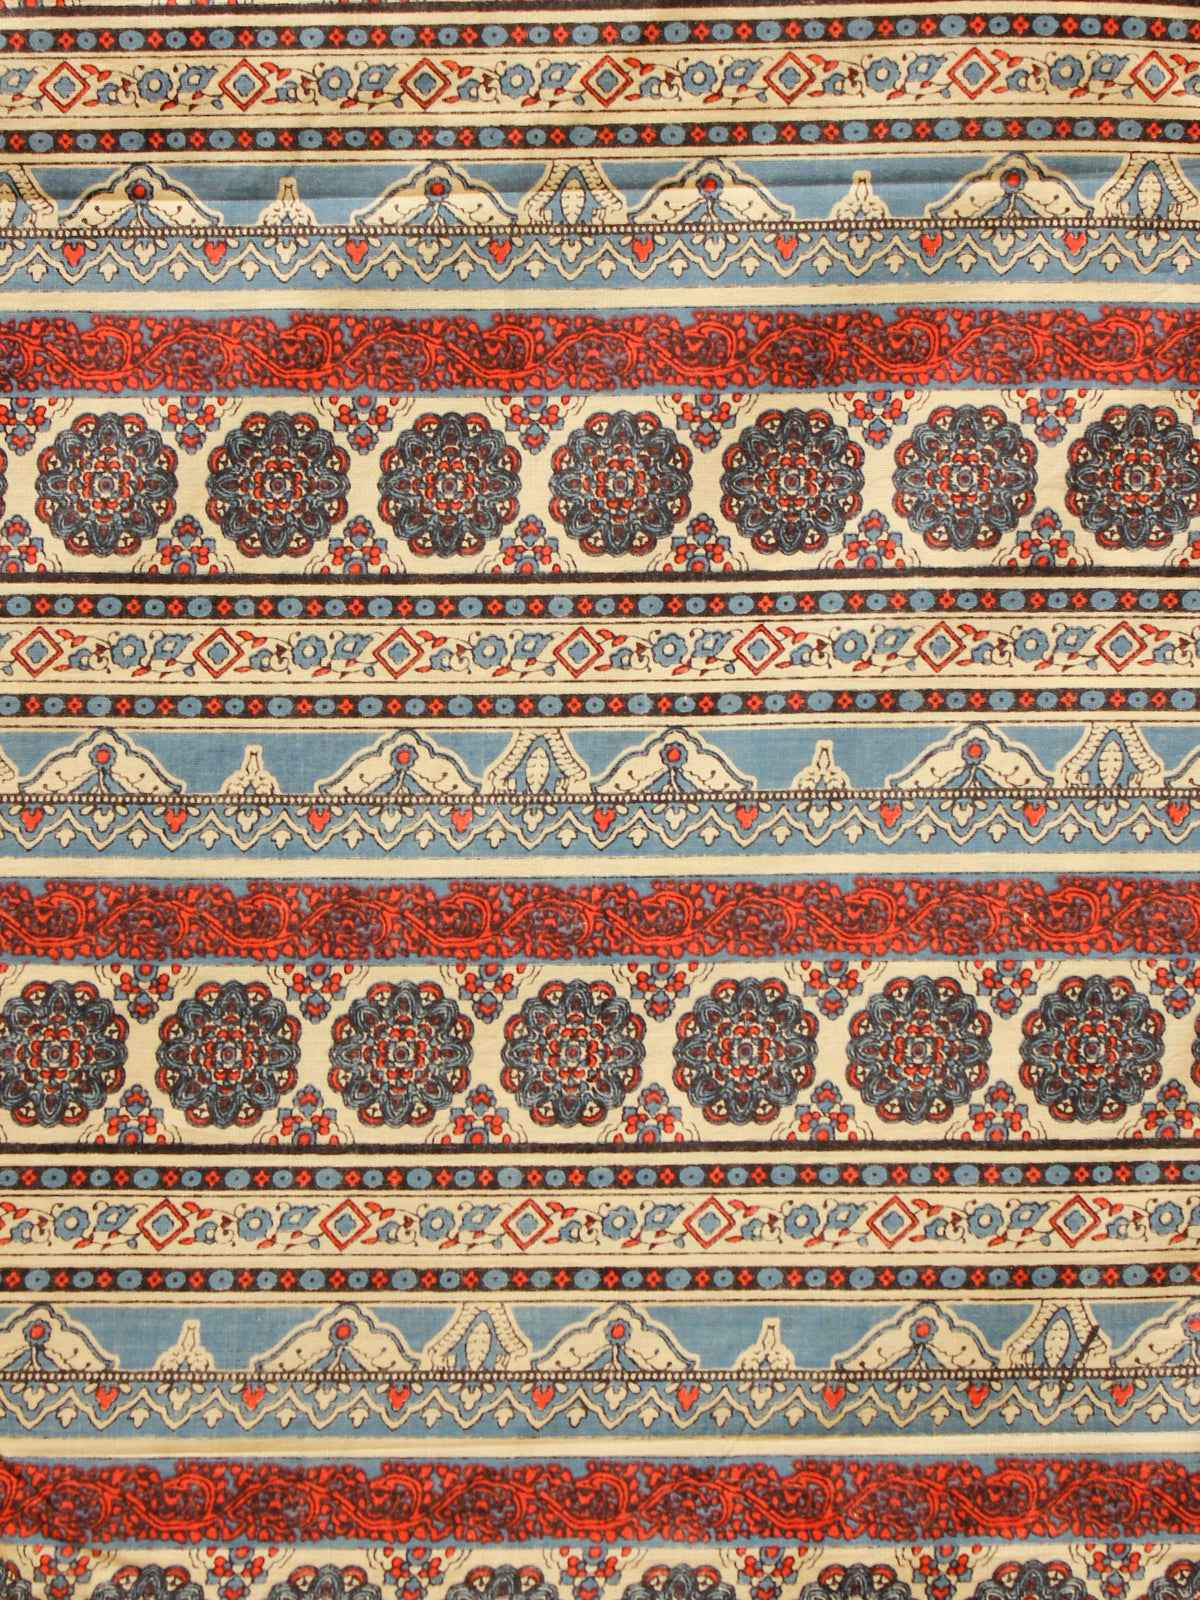 Indigo Ivory Red  Hand Block Printed Cotton Fabric Per Meter - F001F1880